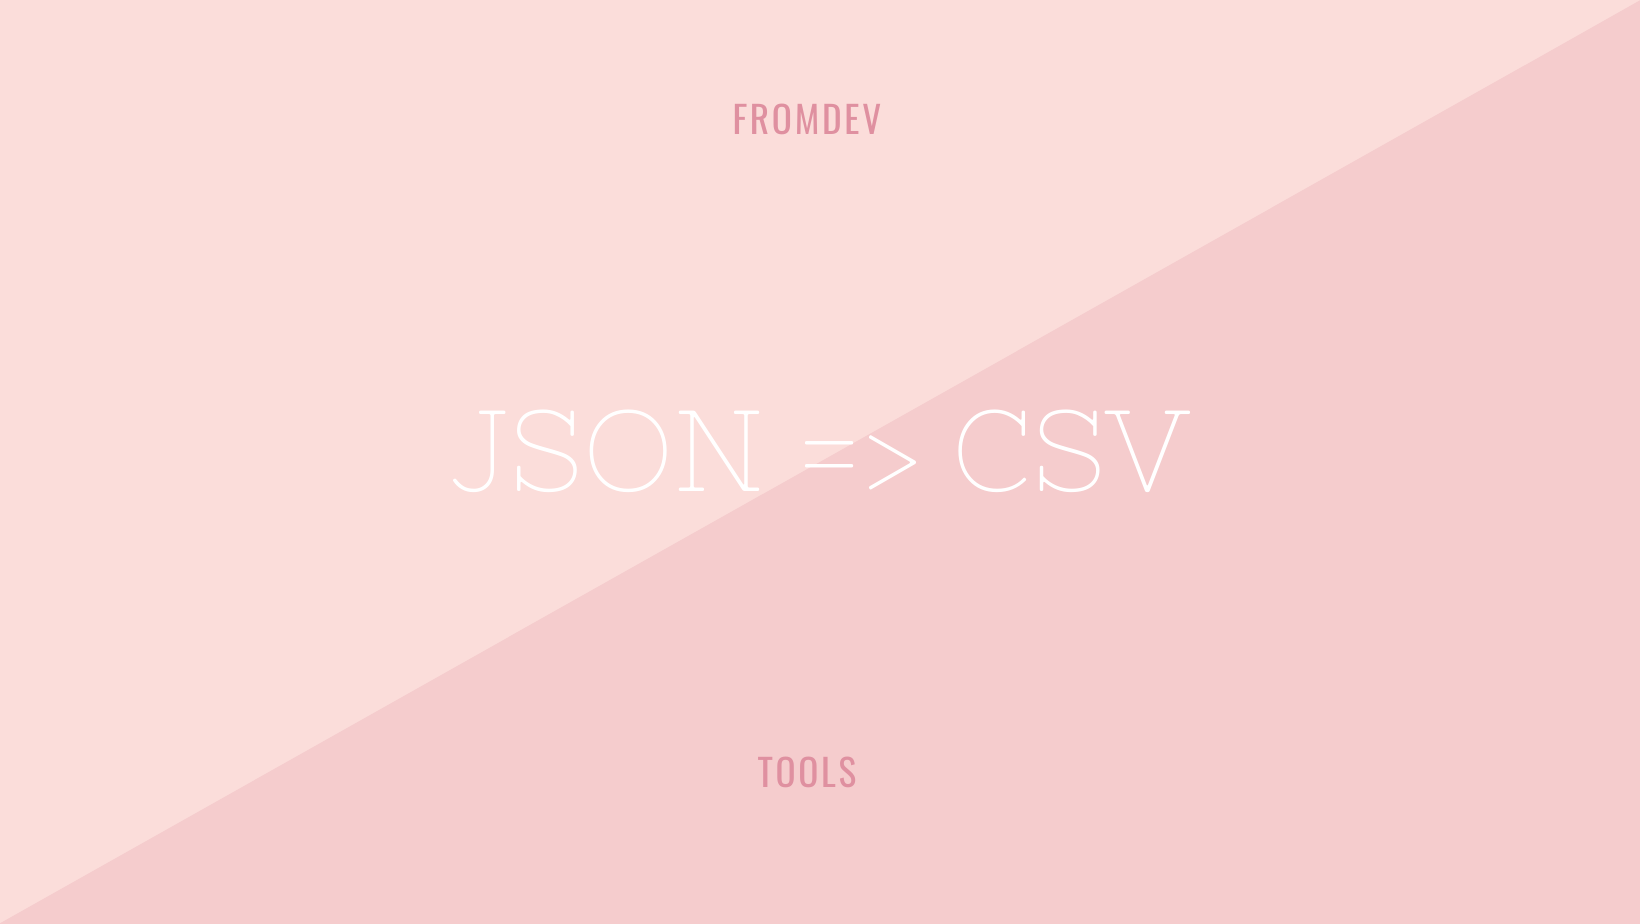 JSON to CSV format converter tool